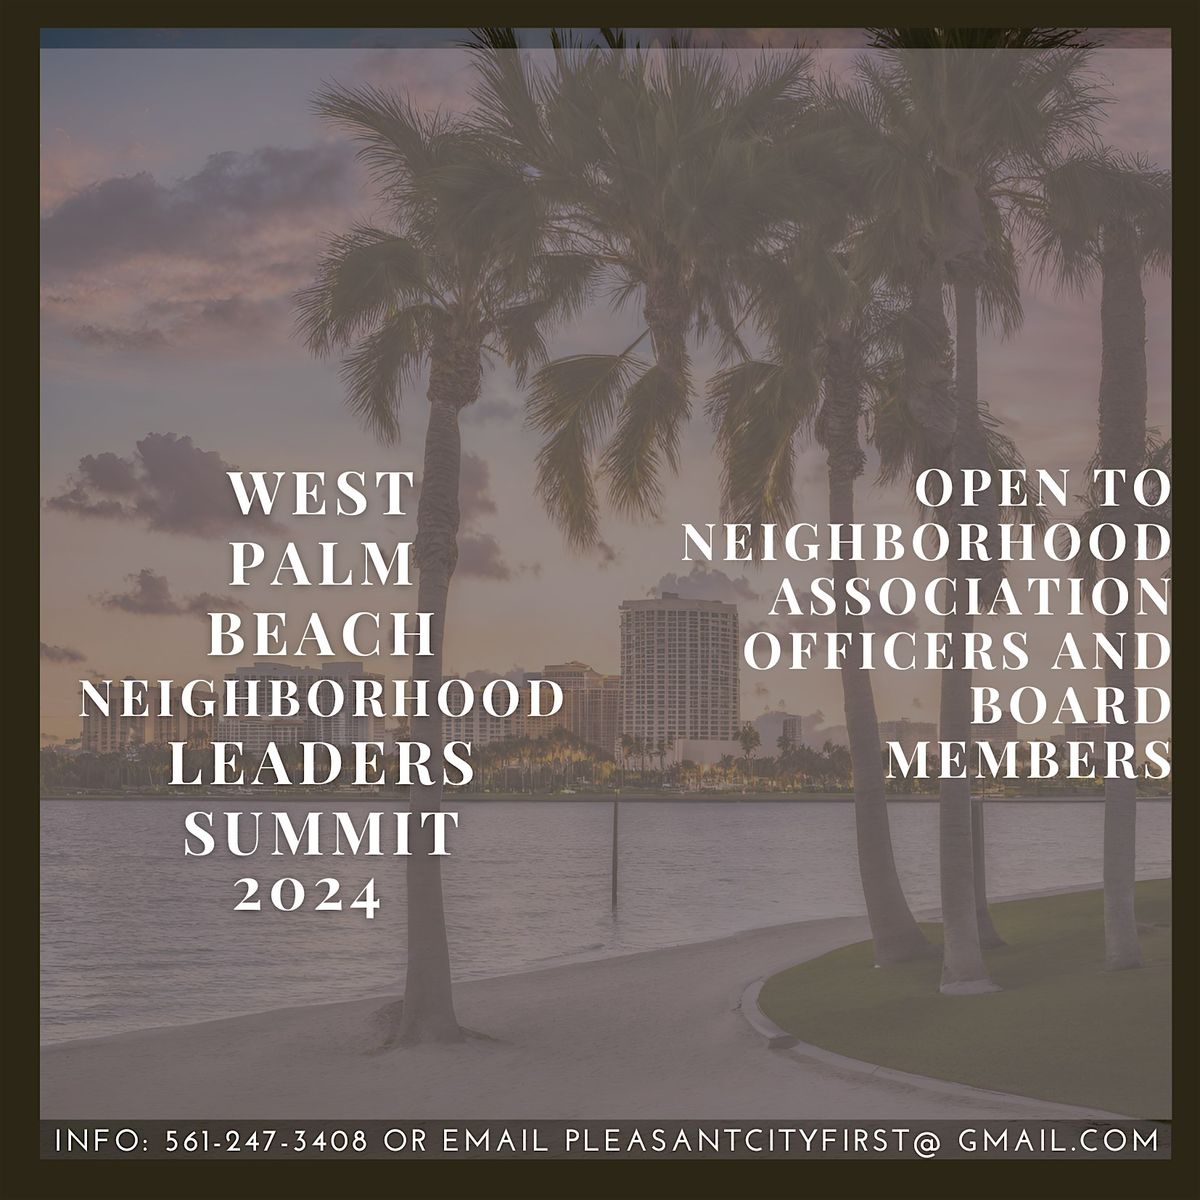 West Palm Beach Neighborhood Leaders Summit 2024